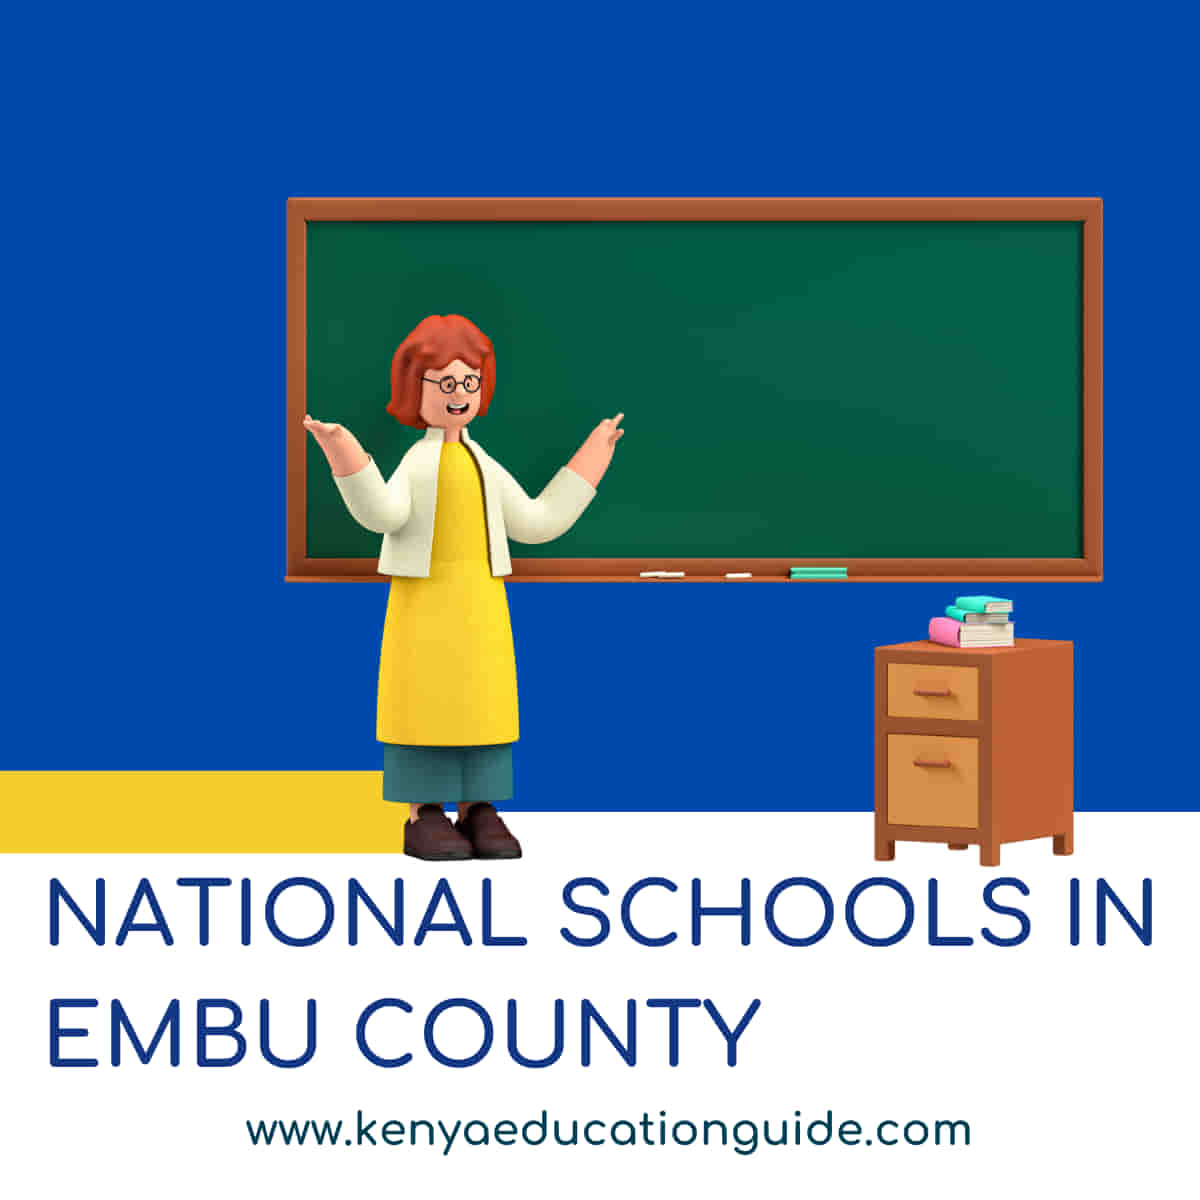 National schools in Embu County